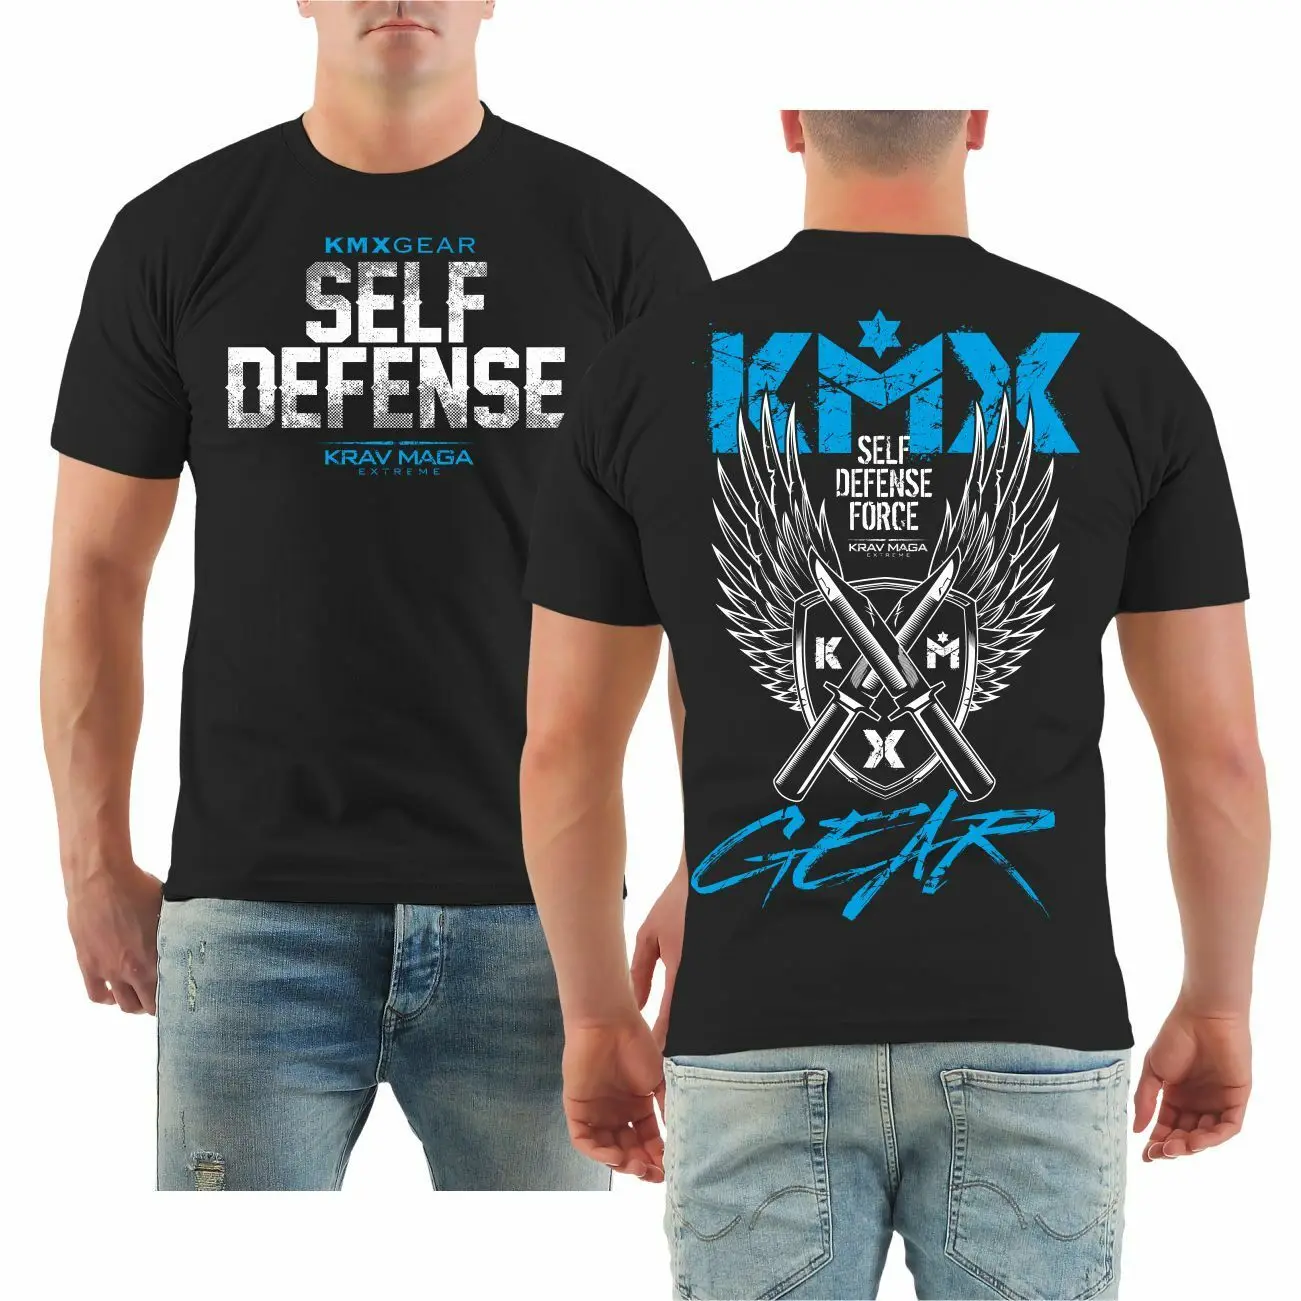 

Krav Maga Israel Self Defense Martial Art Boxing Combat T Shirt. Short Sleeve 100% Cotton Casual T-shirts Loose Top Size S-3XL